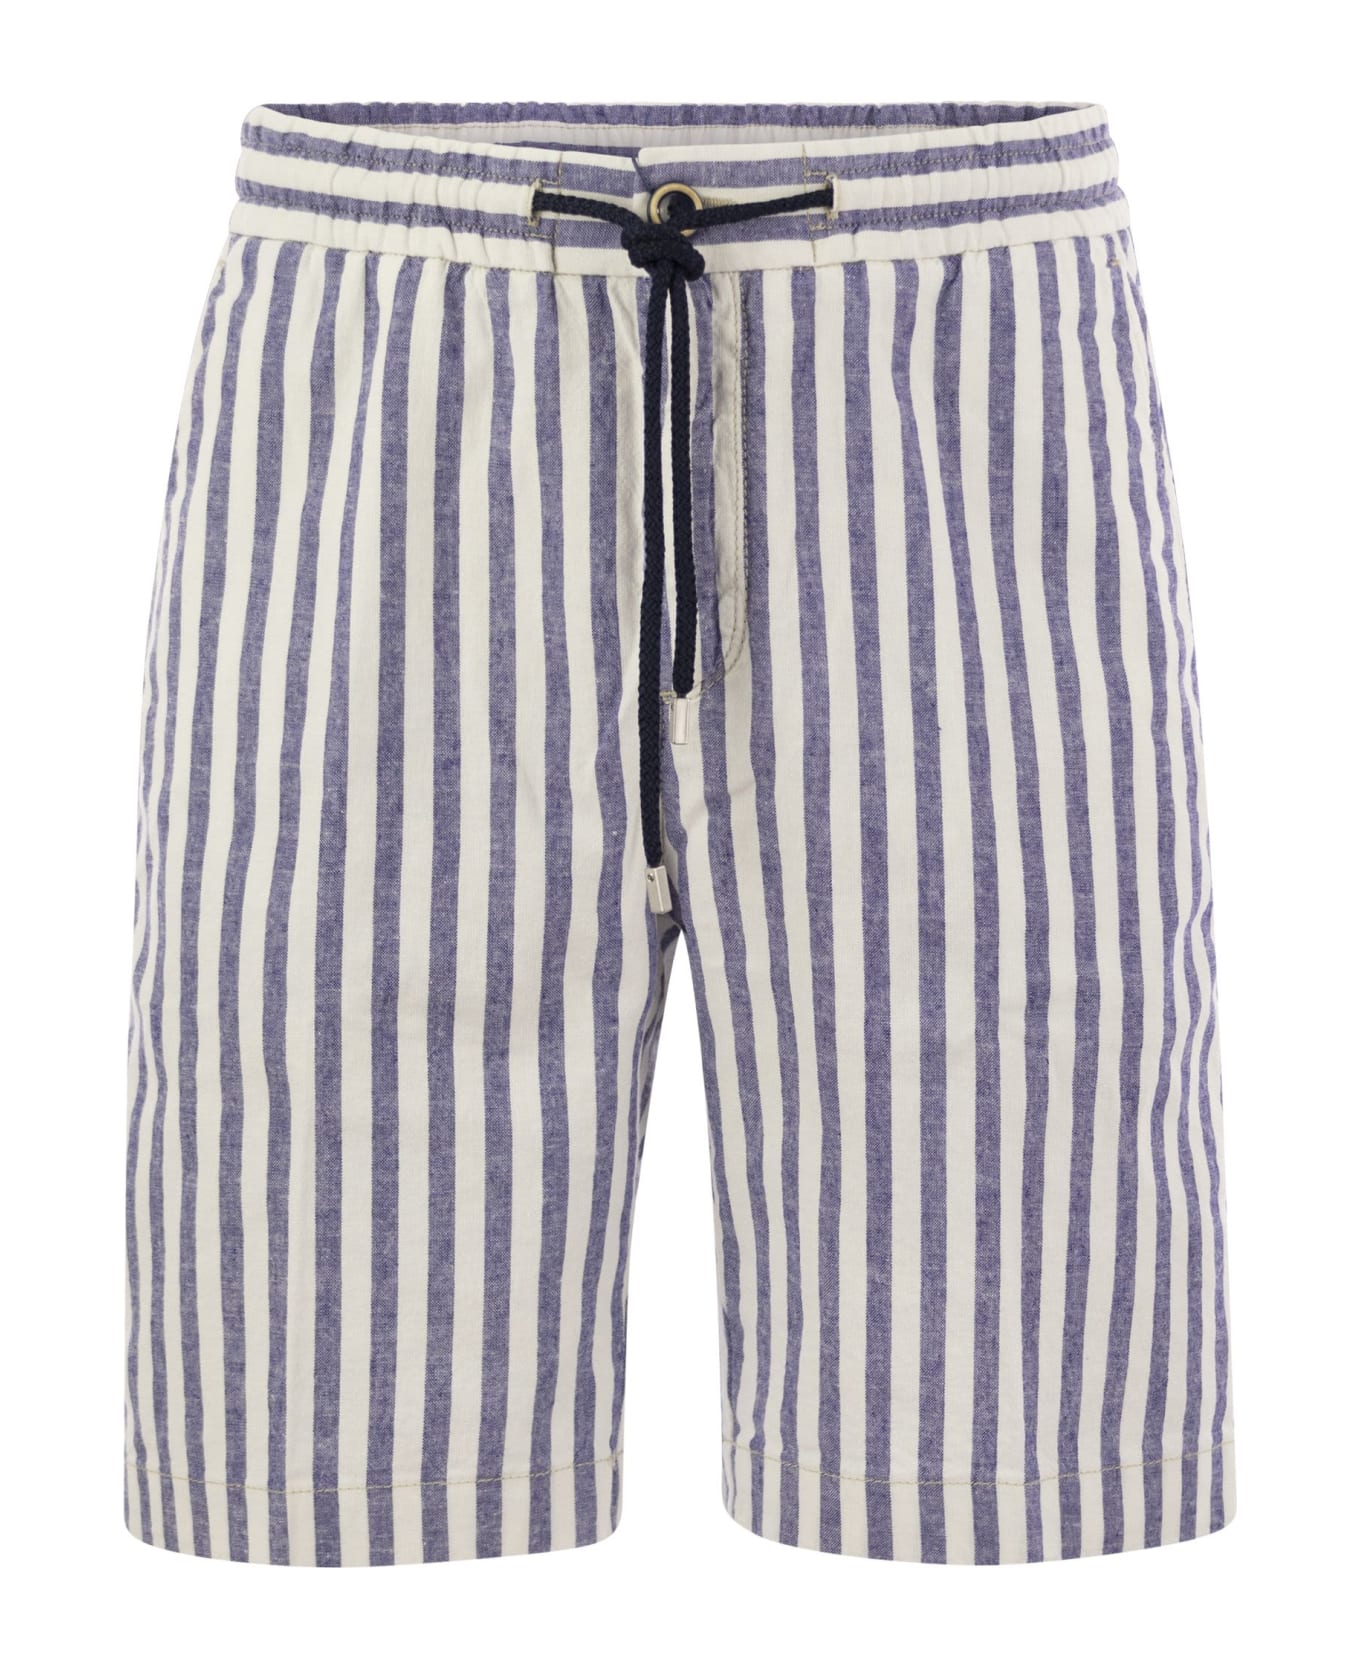 Vilebrequin Striped Cotton And Linen Bermuda Shorts - Blue